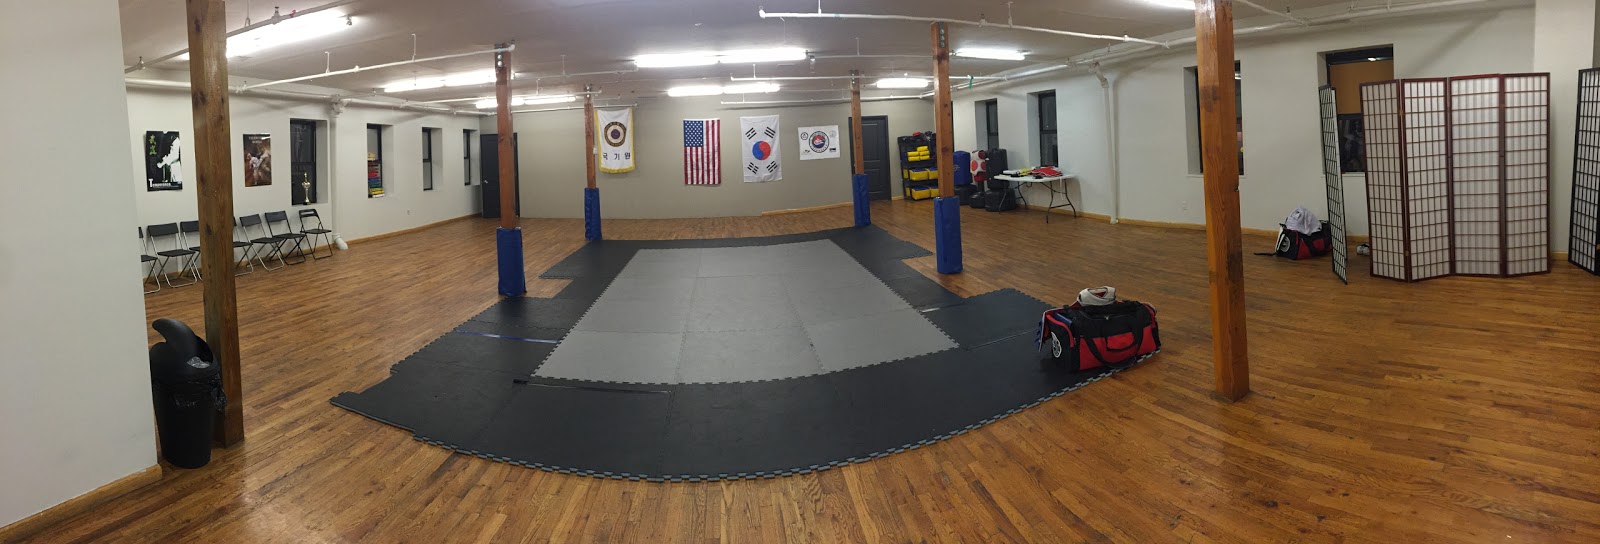 Photo of Team Raposa Taekwondo in Newark City, New Jersey, United States - 1 Picture of Point of interest, Establishment, Health, Gym